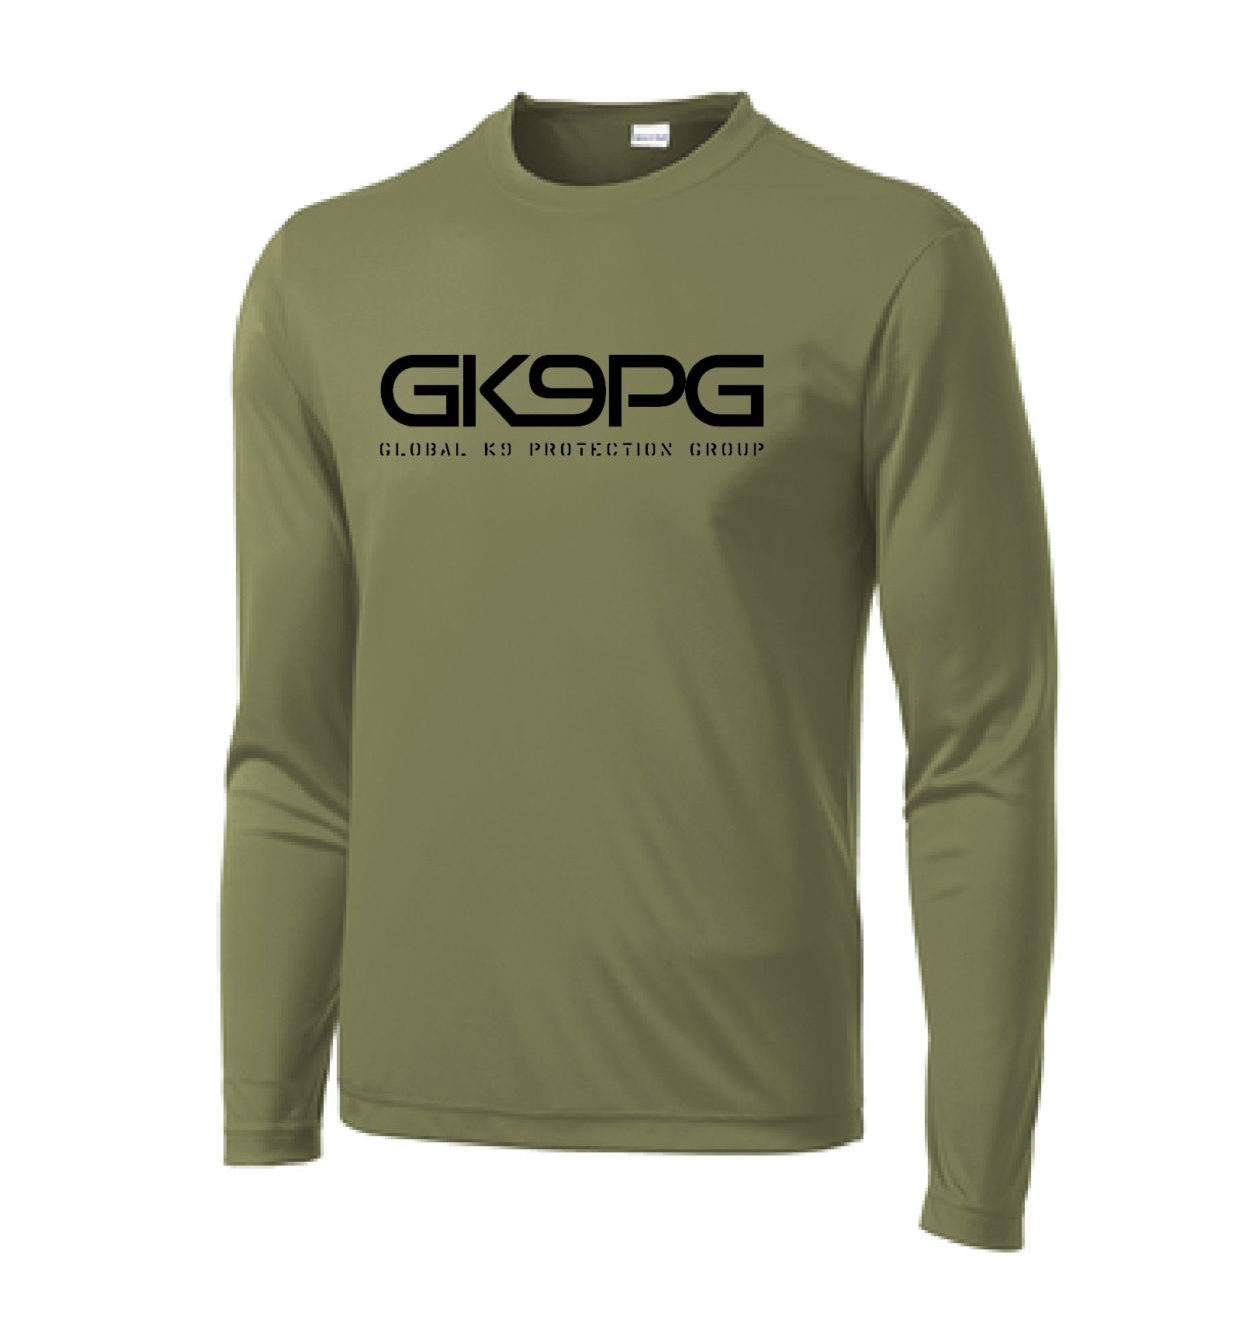 Global K9 Long Sleeve Fishing Shirt - Victory Designs